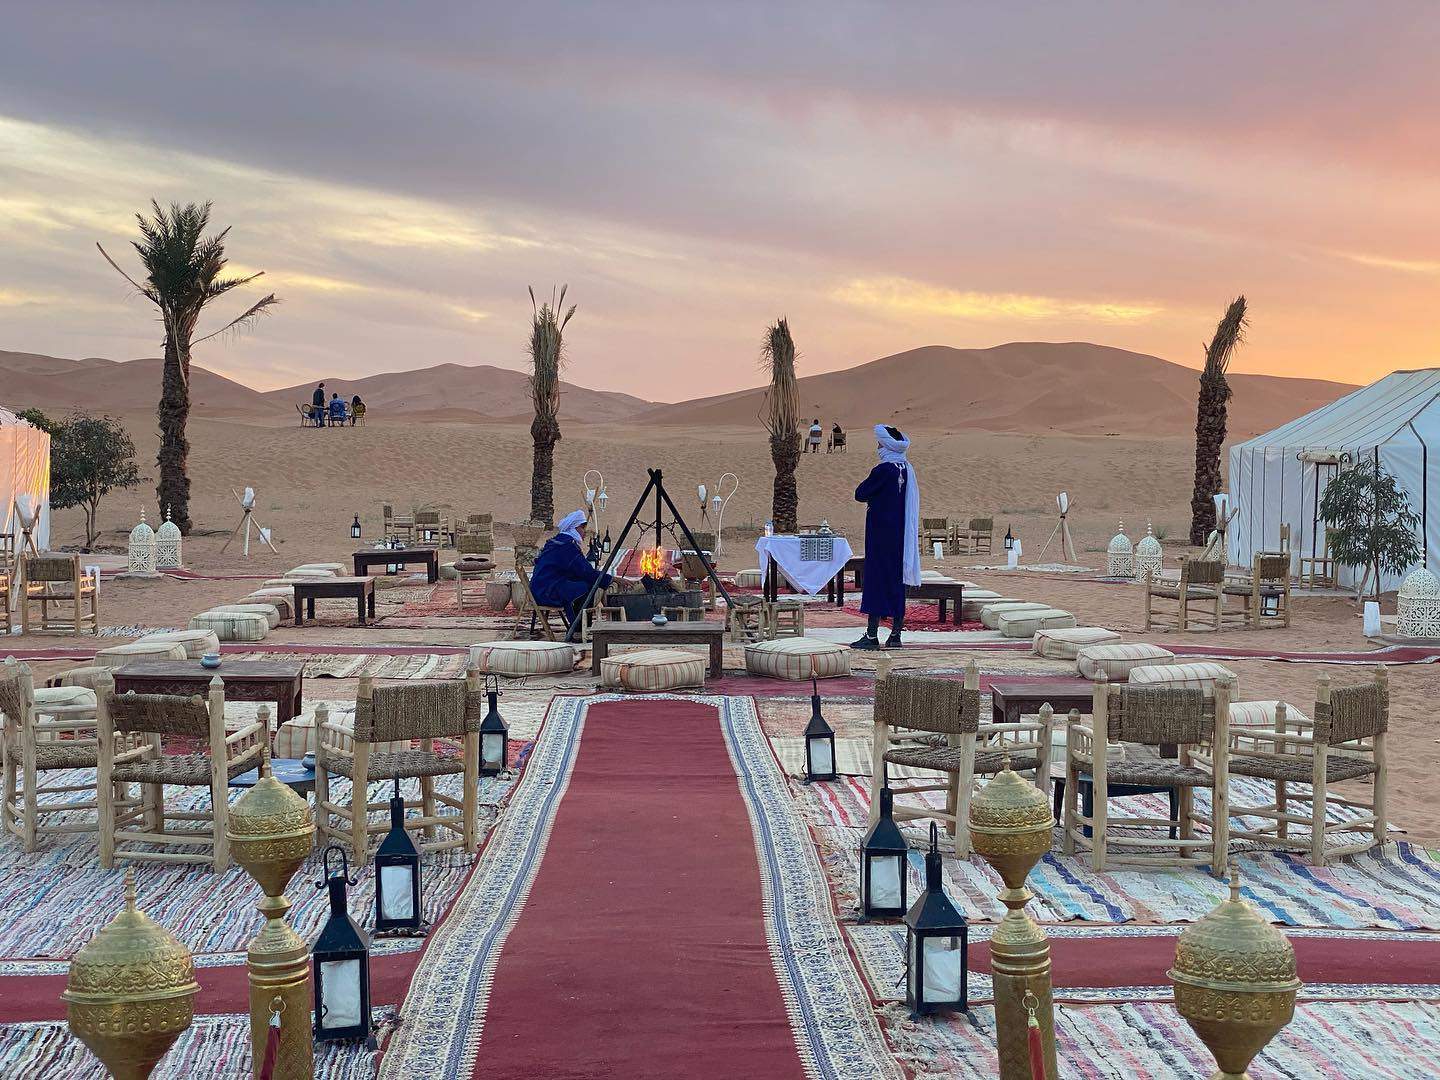 Morocco best sahara tours, travel to desert